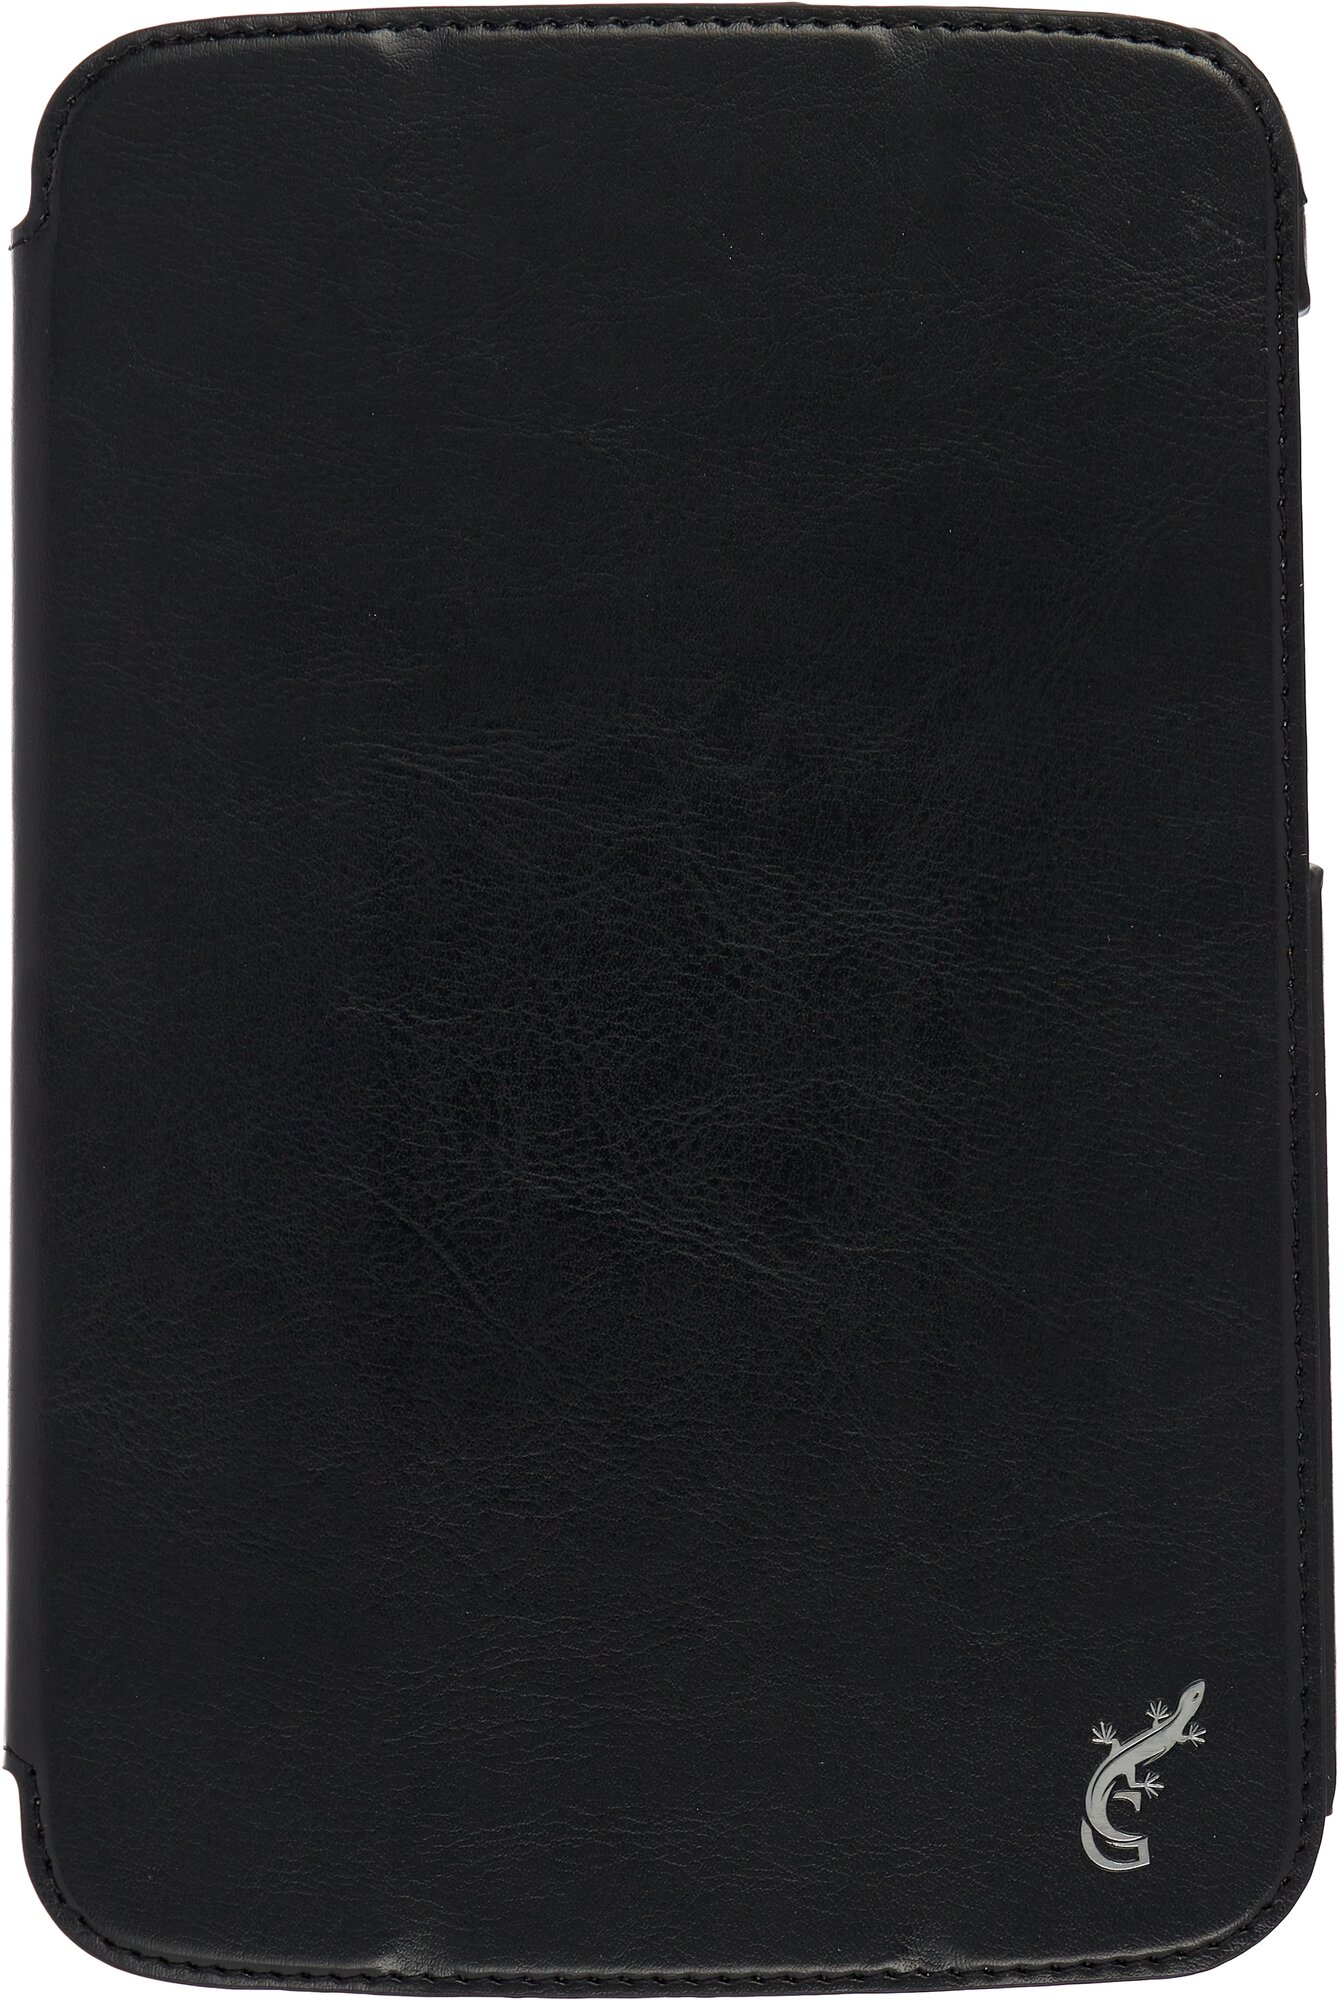 Чехол G-Case Slim Premium для Samsung Galaxy Note 8.0(N5100/N5110) черный